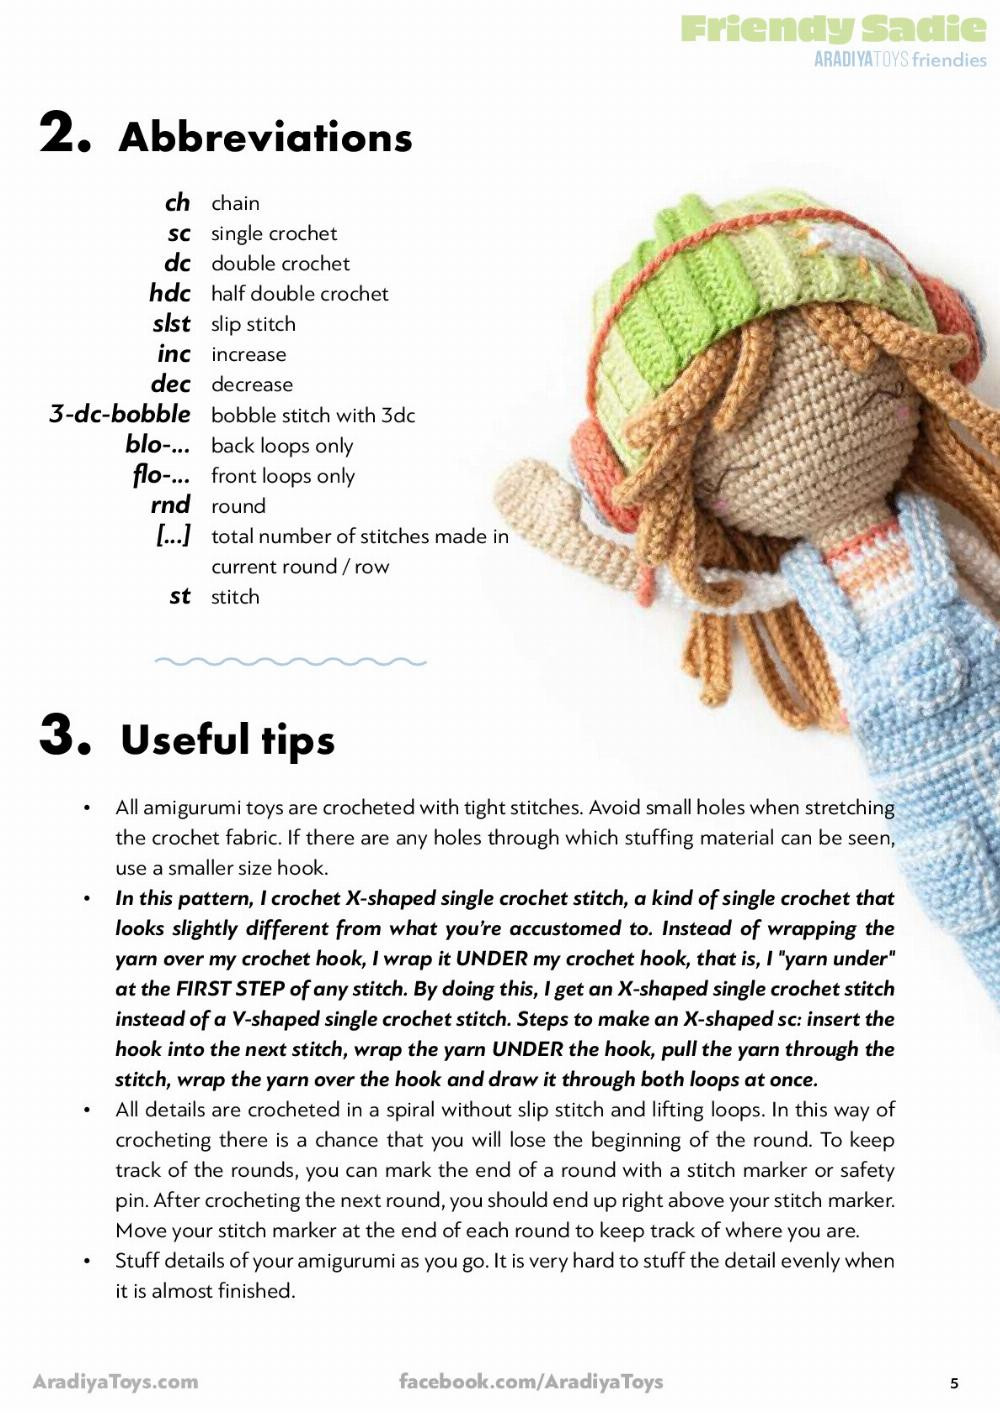 Friendy Sadie AradiyaToys friendies, Crochet pattern for a little girl doll wearing overalls, a beanie hat and headphones